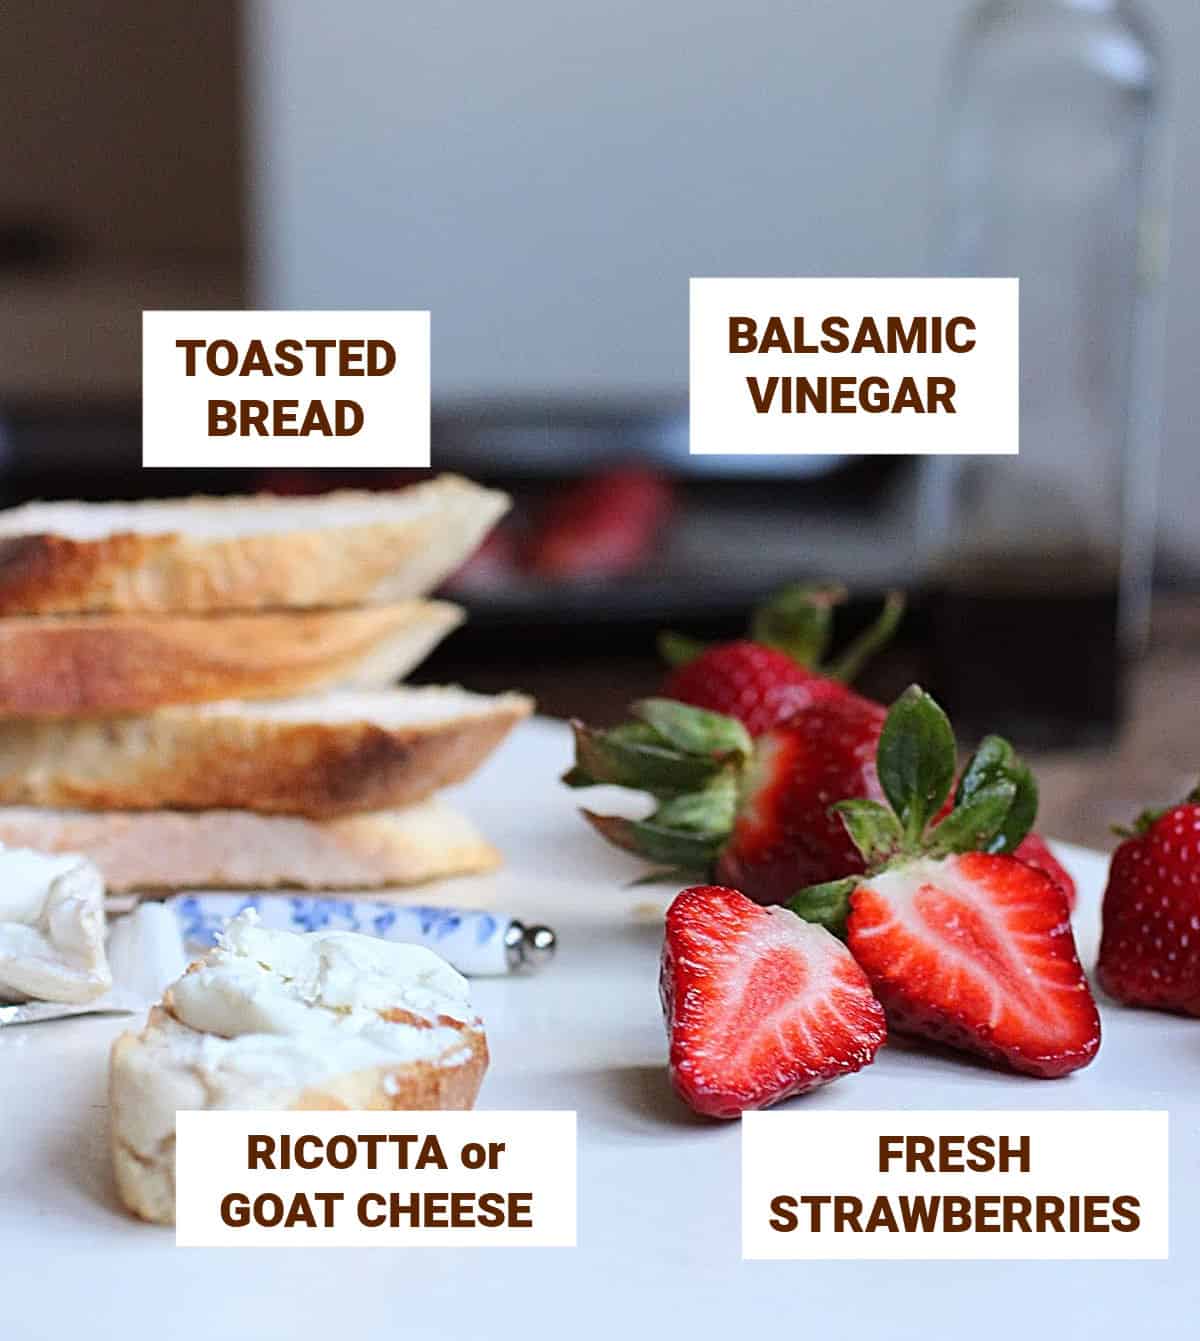 Strawberries, bread slices, vinegar bottle, cheese, knife on white table, text overlay